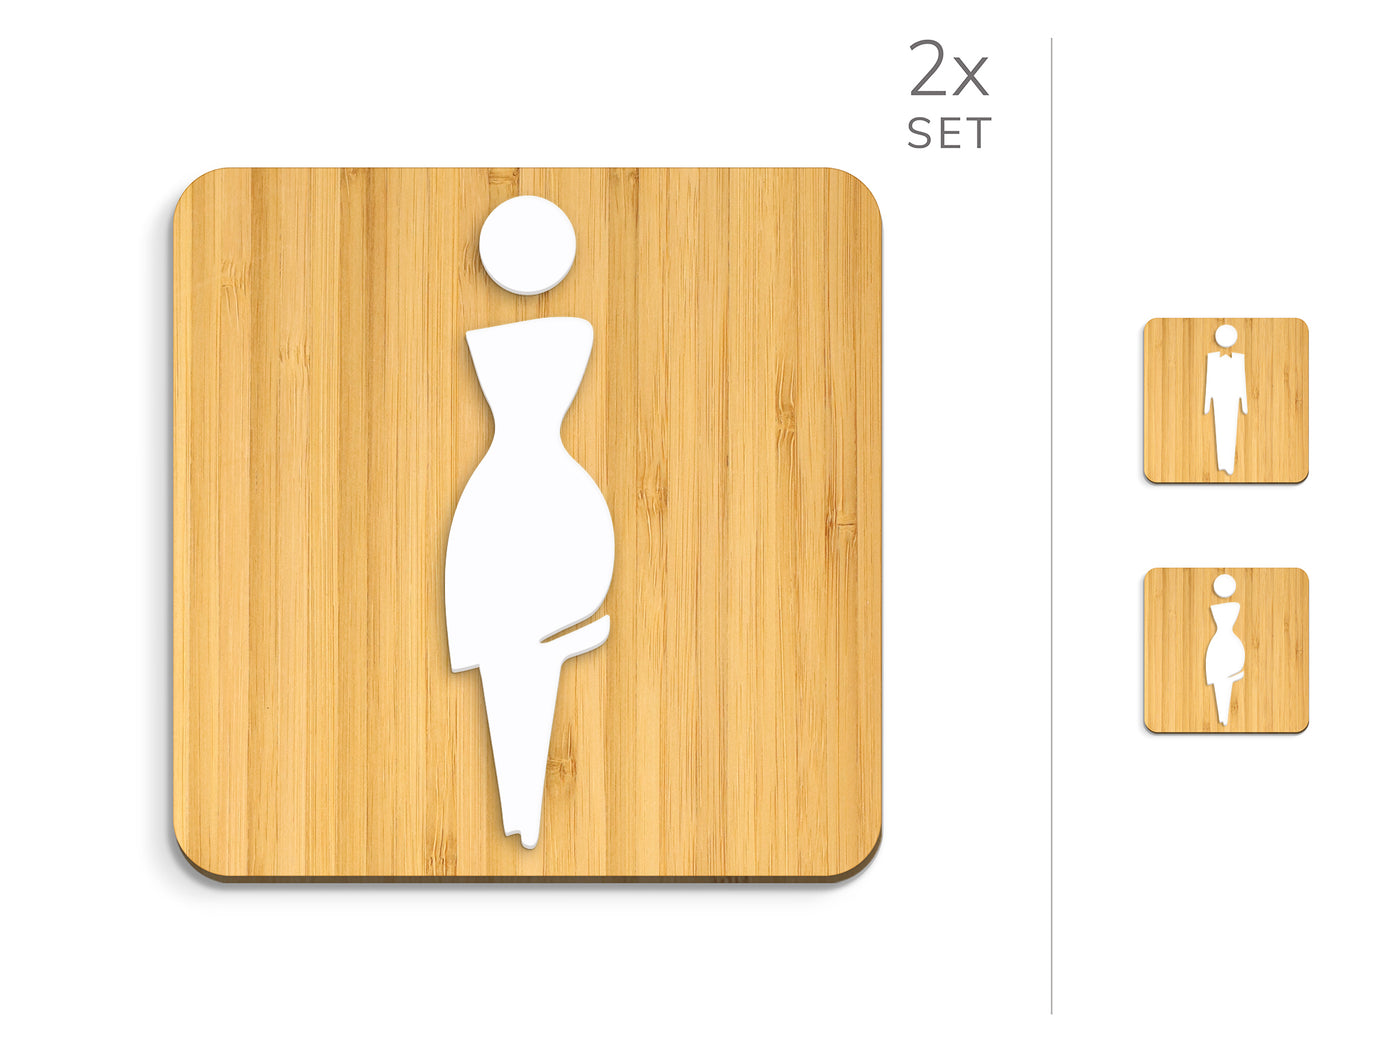 Elegant, 2x Square Base - Restroom Signs Set - Man, Woman